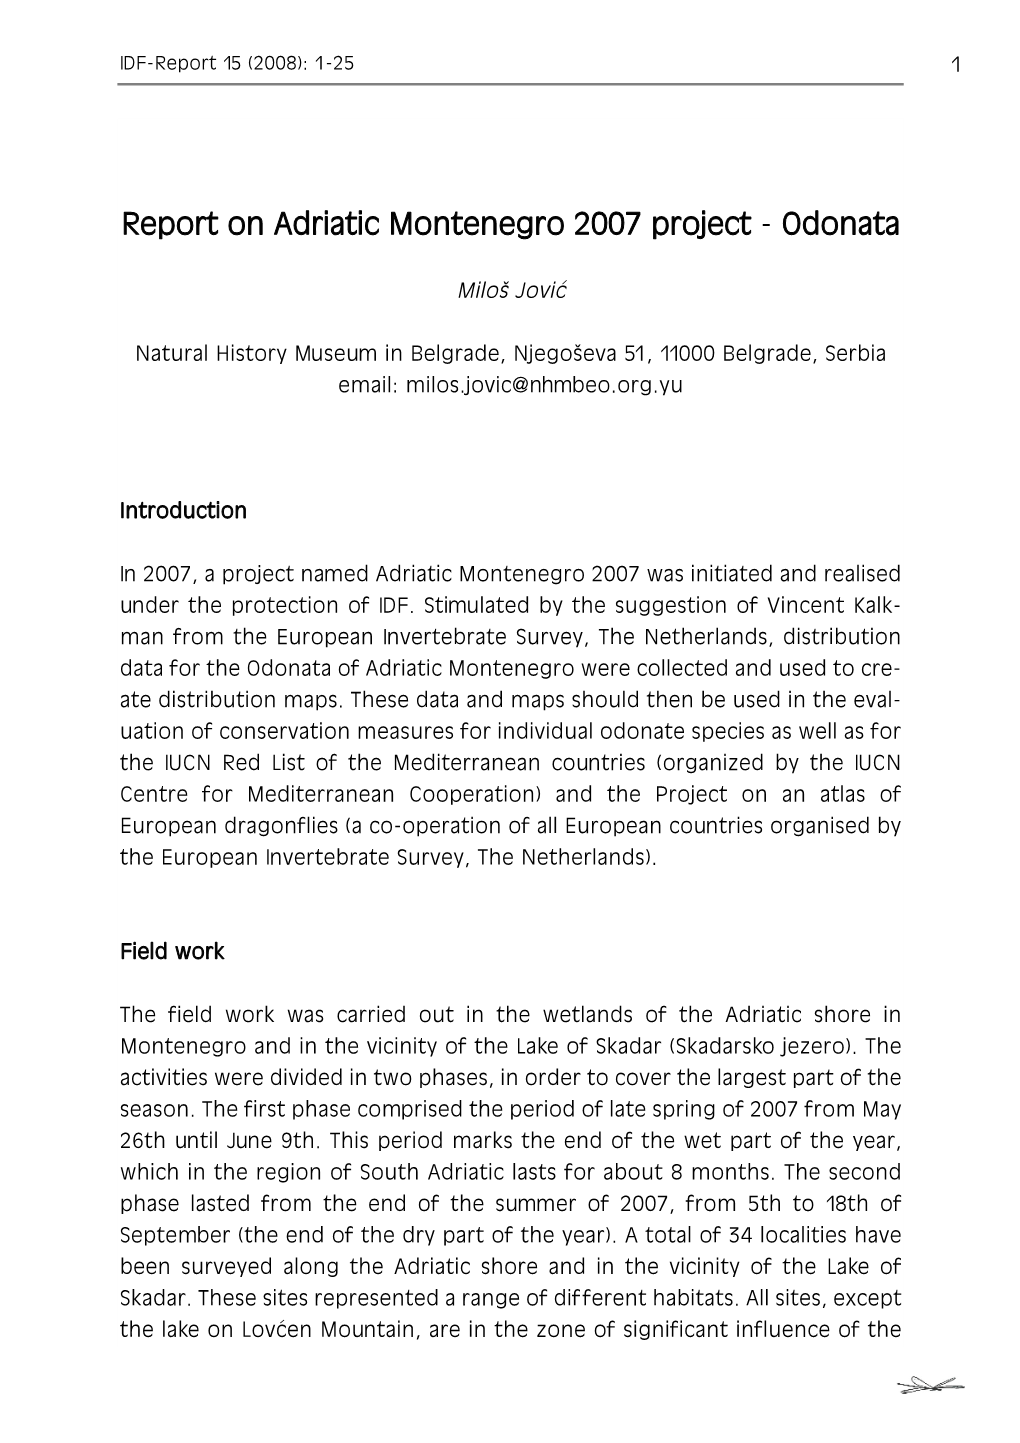 Report on Adriatic Montenegro 2007 Project - Odonata